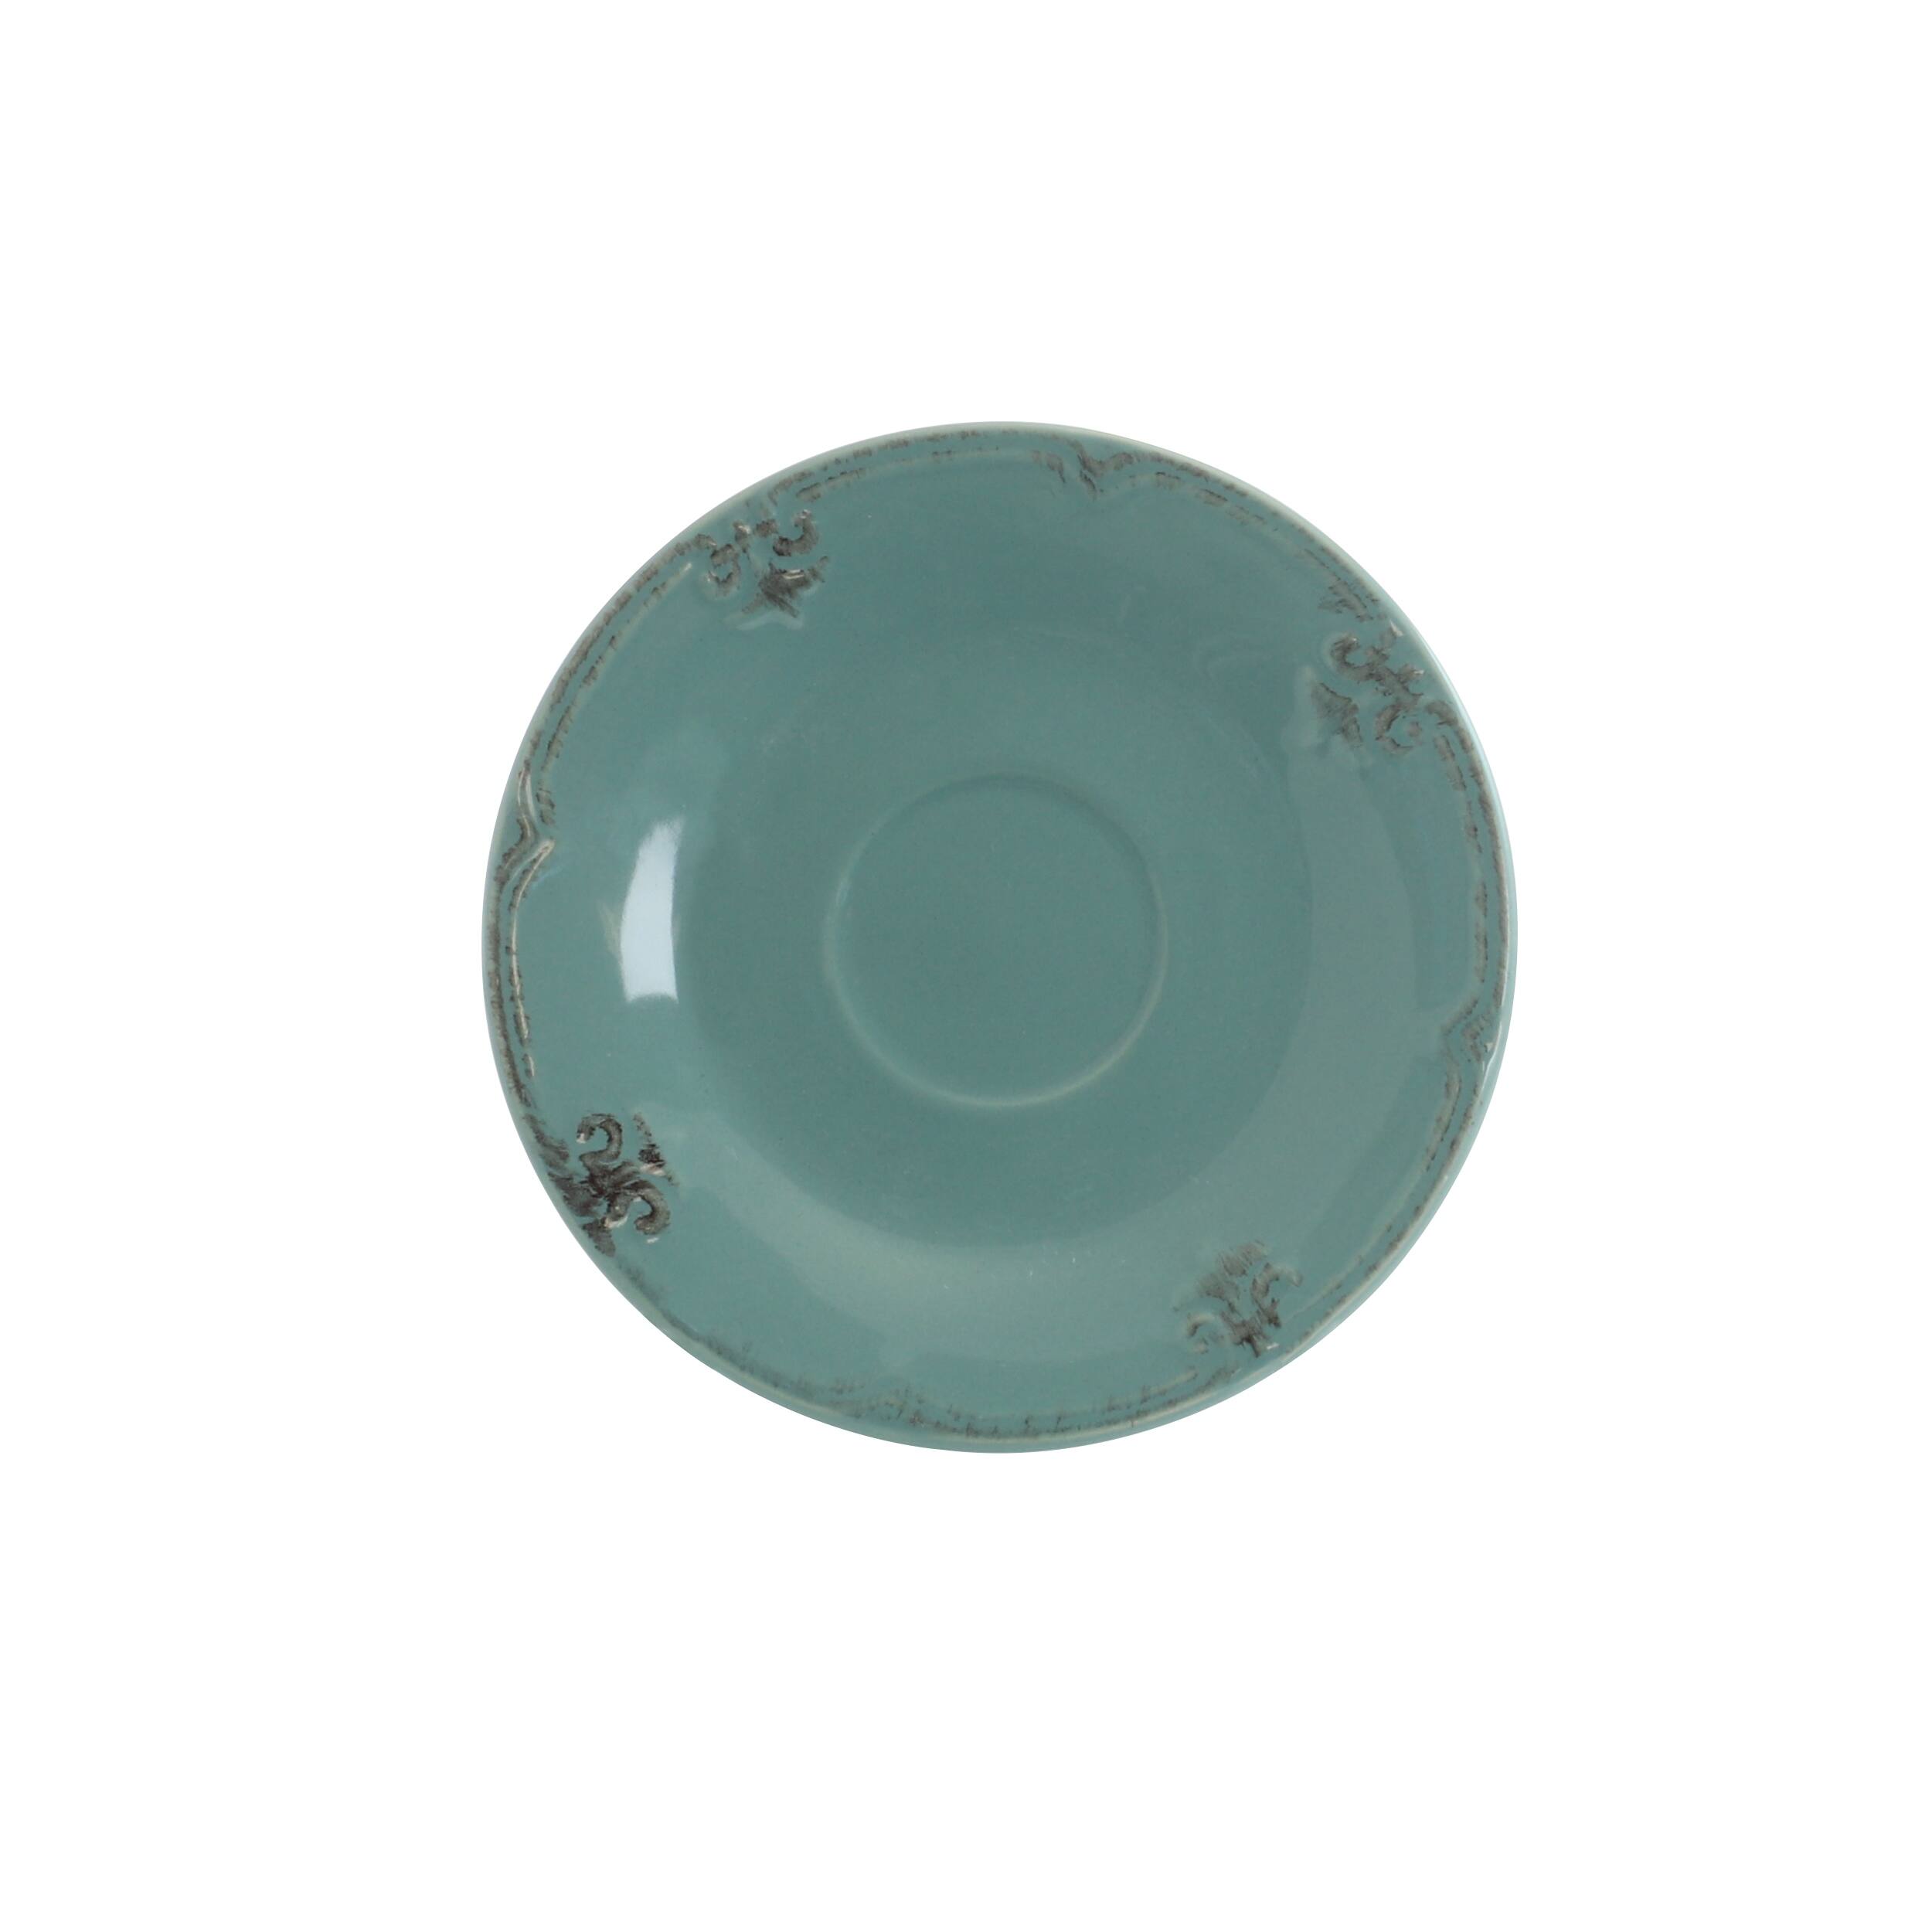 20-Piece Dinnerware Set in Turquoise